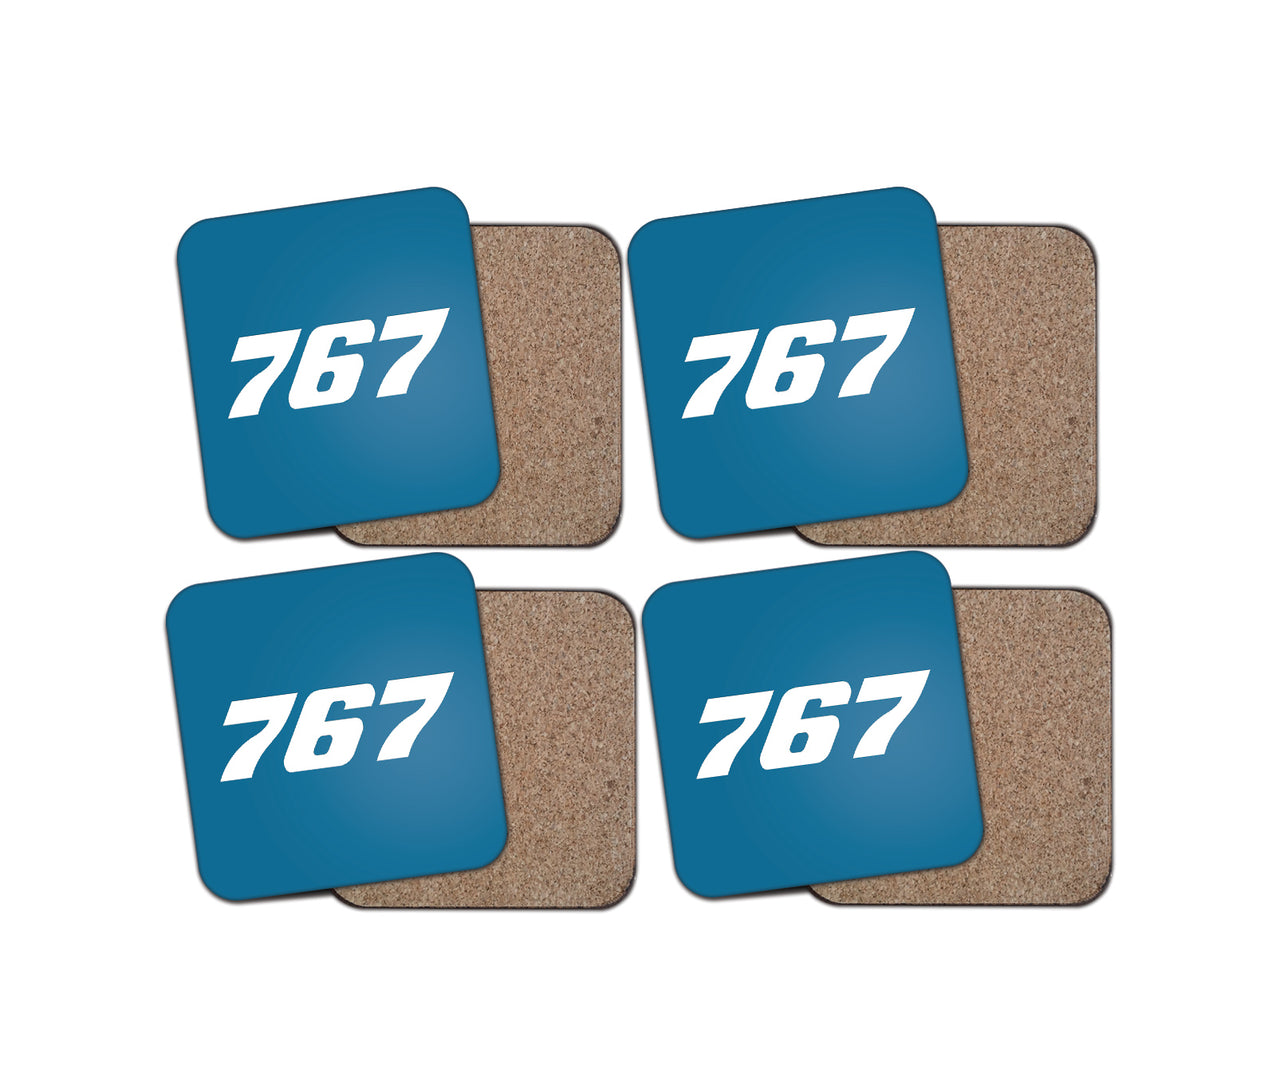 767 Flat Text Designed Coasters